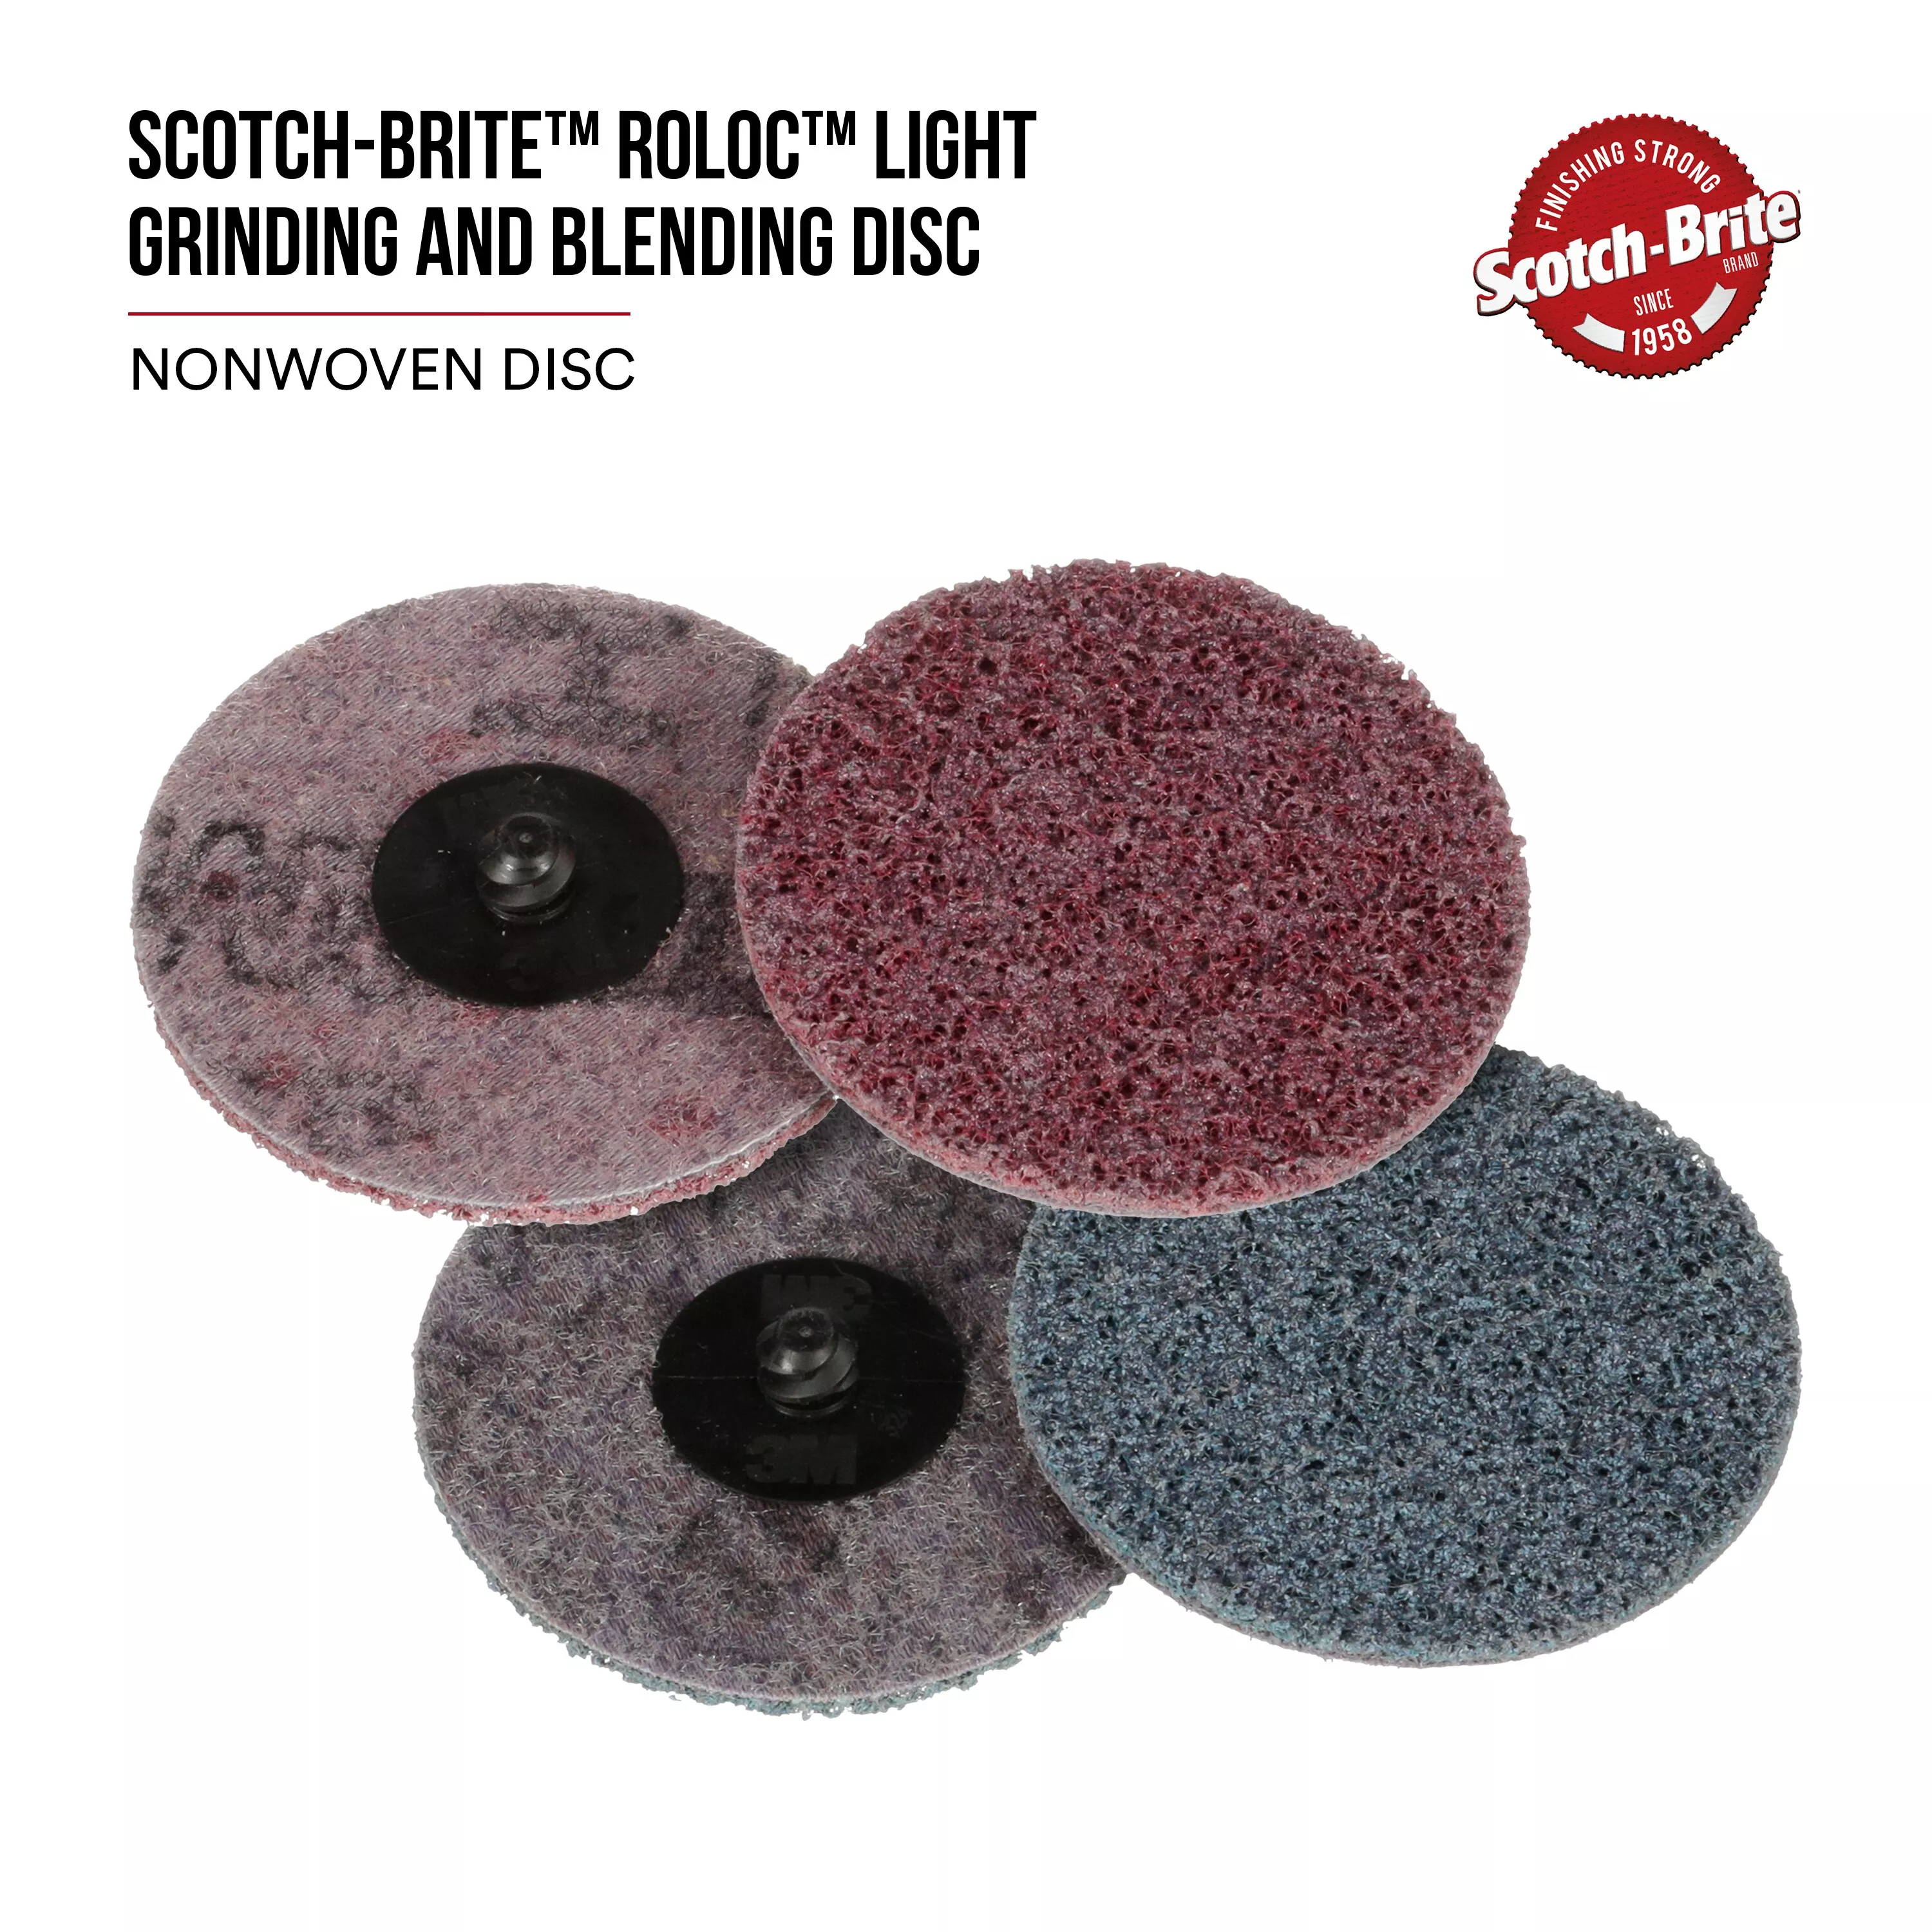 SKU 7100023496 | Scotch-Brite™ Roloc™ Light Grinding and Blending Disc